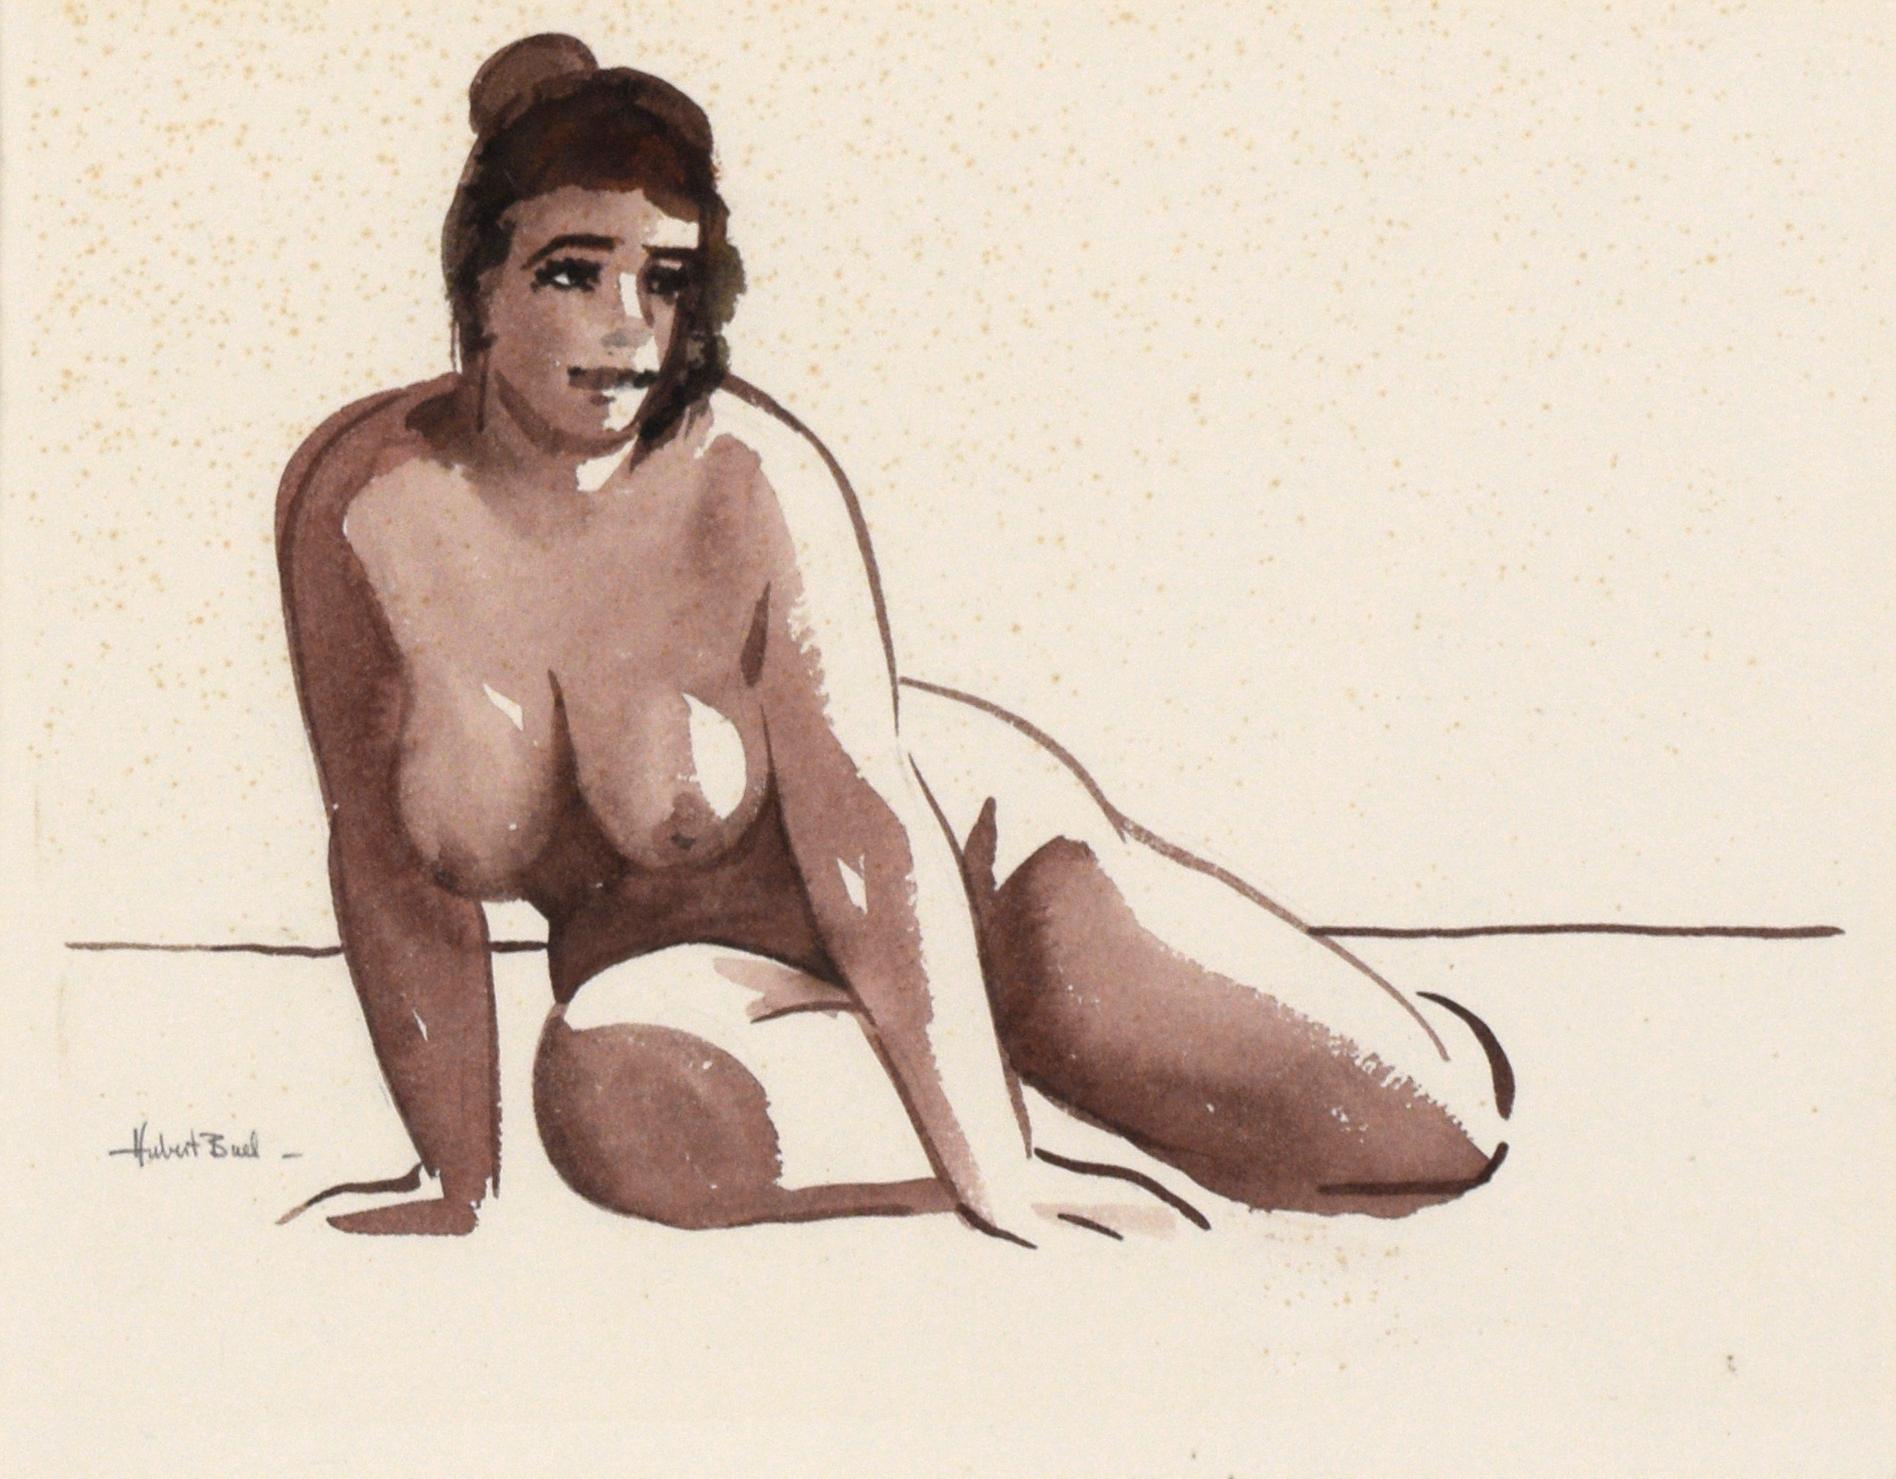 Reclining Nude - Mid Century Bay Area Figurative Movement Female Figure Study - Art by Hubert Buel